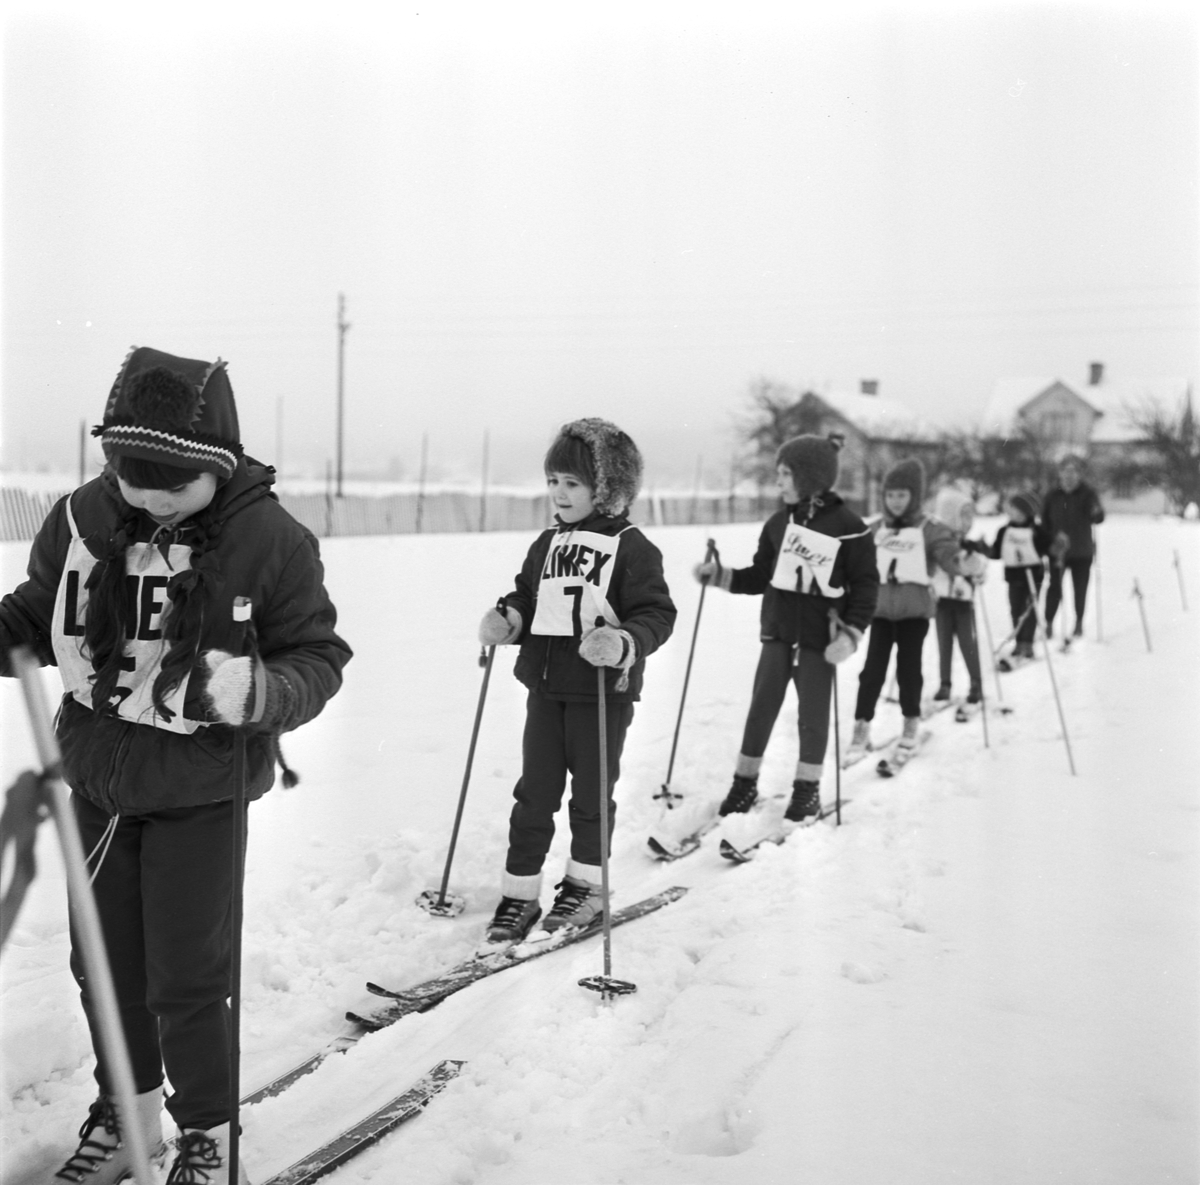 Skidskolestart i Tierp, Uppland 18 januari 1969